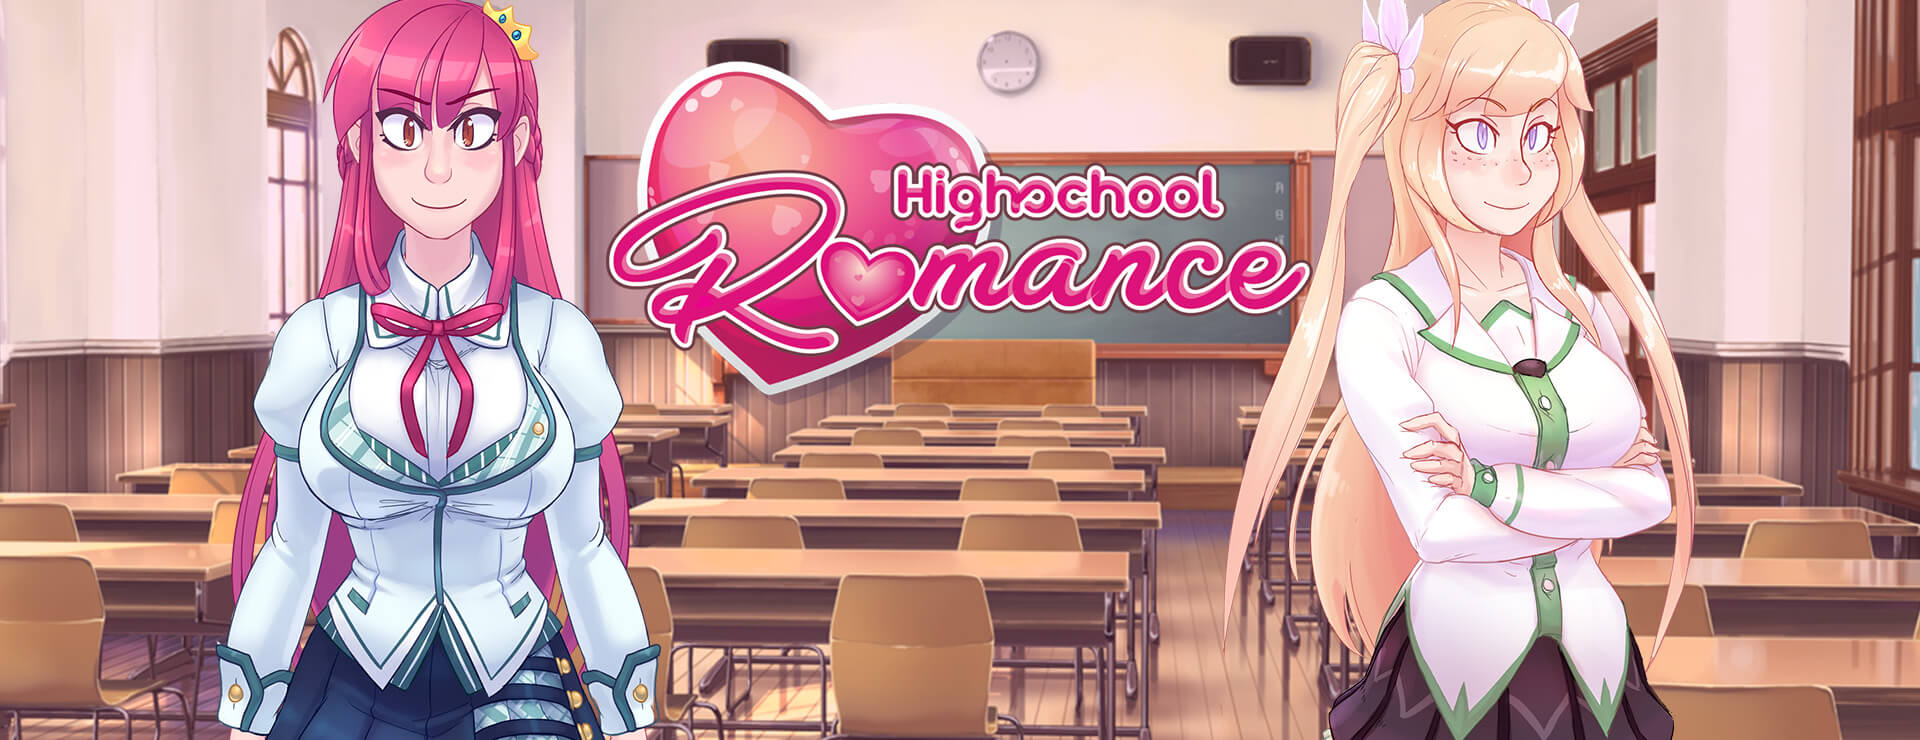 Highschool Romance - Japanisches Adventure Spiel